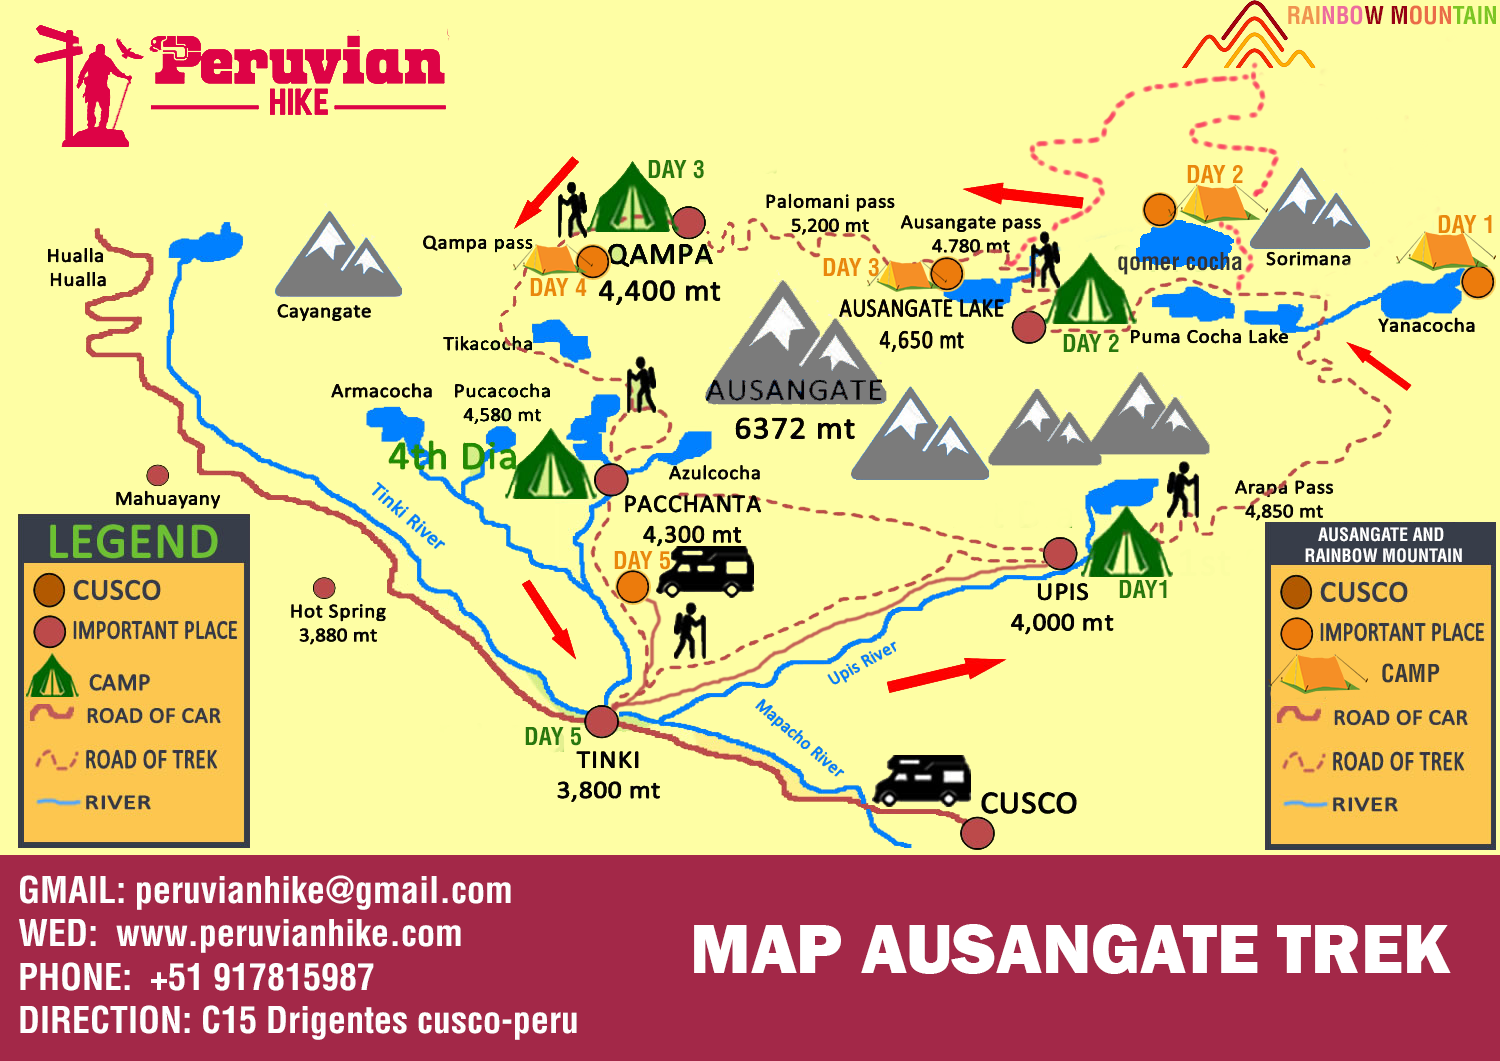 Ausangate trek 5 days map and itinerary